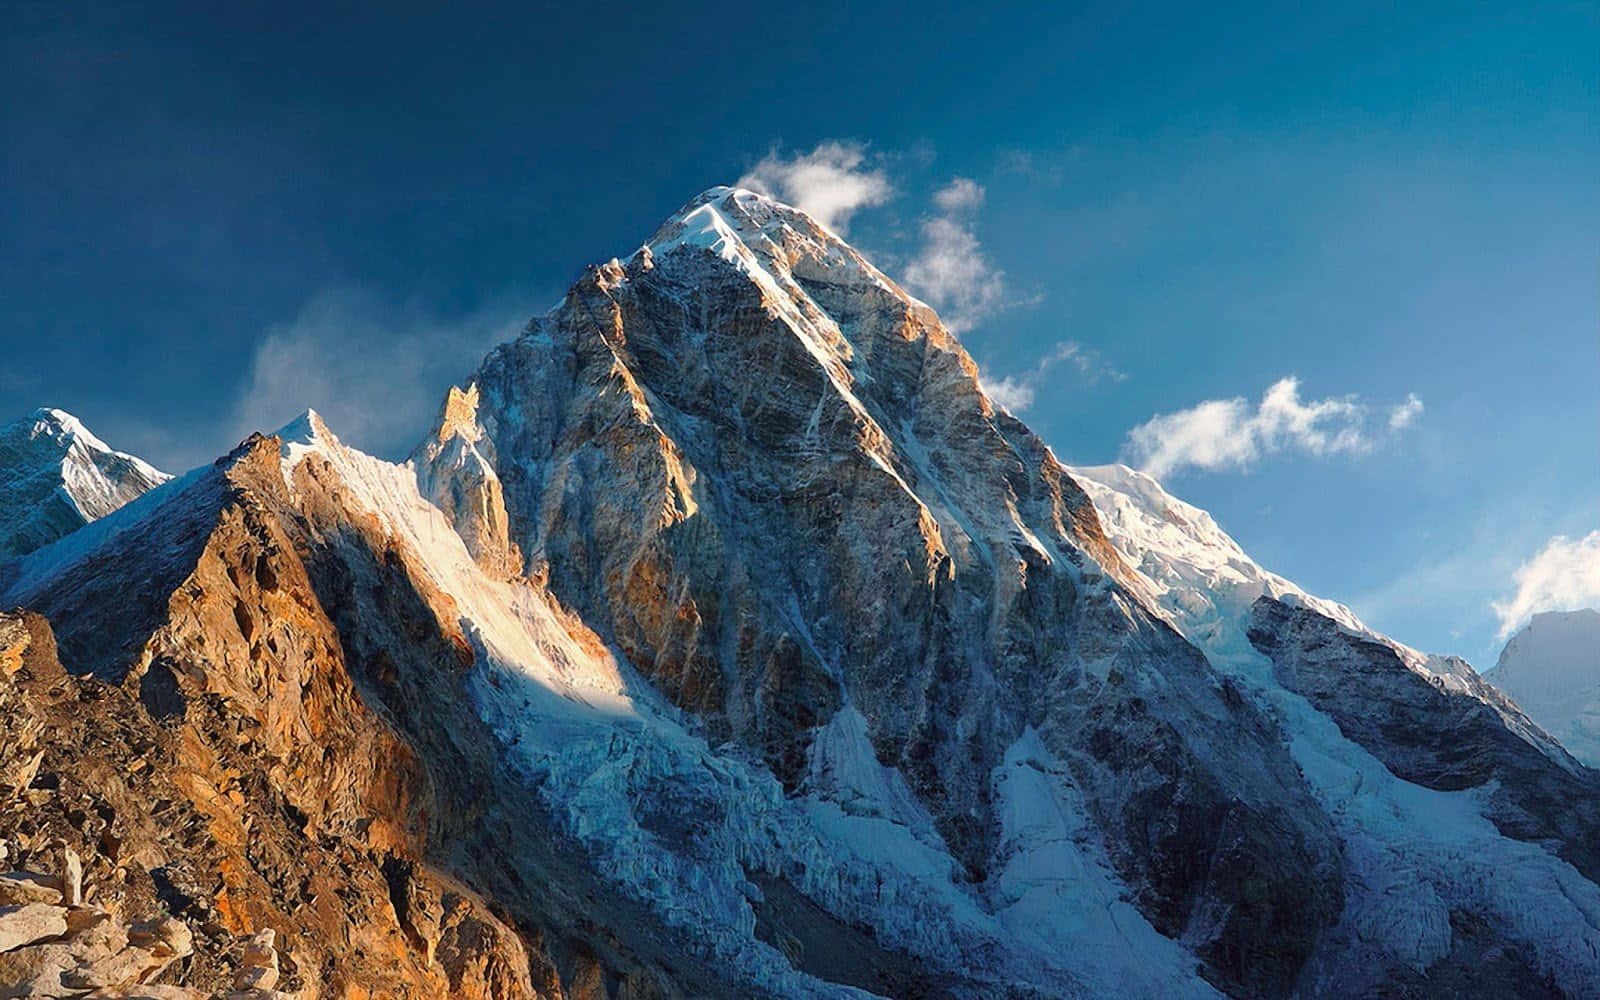 "Spectacular View of the Himalayas"